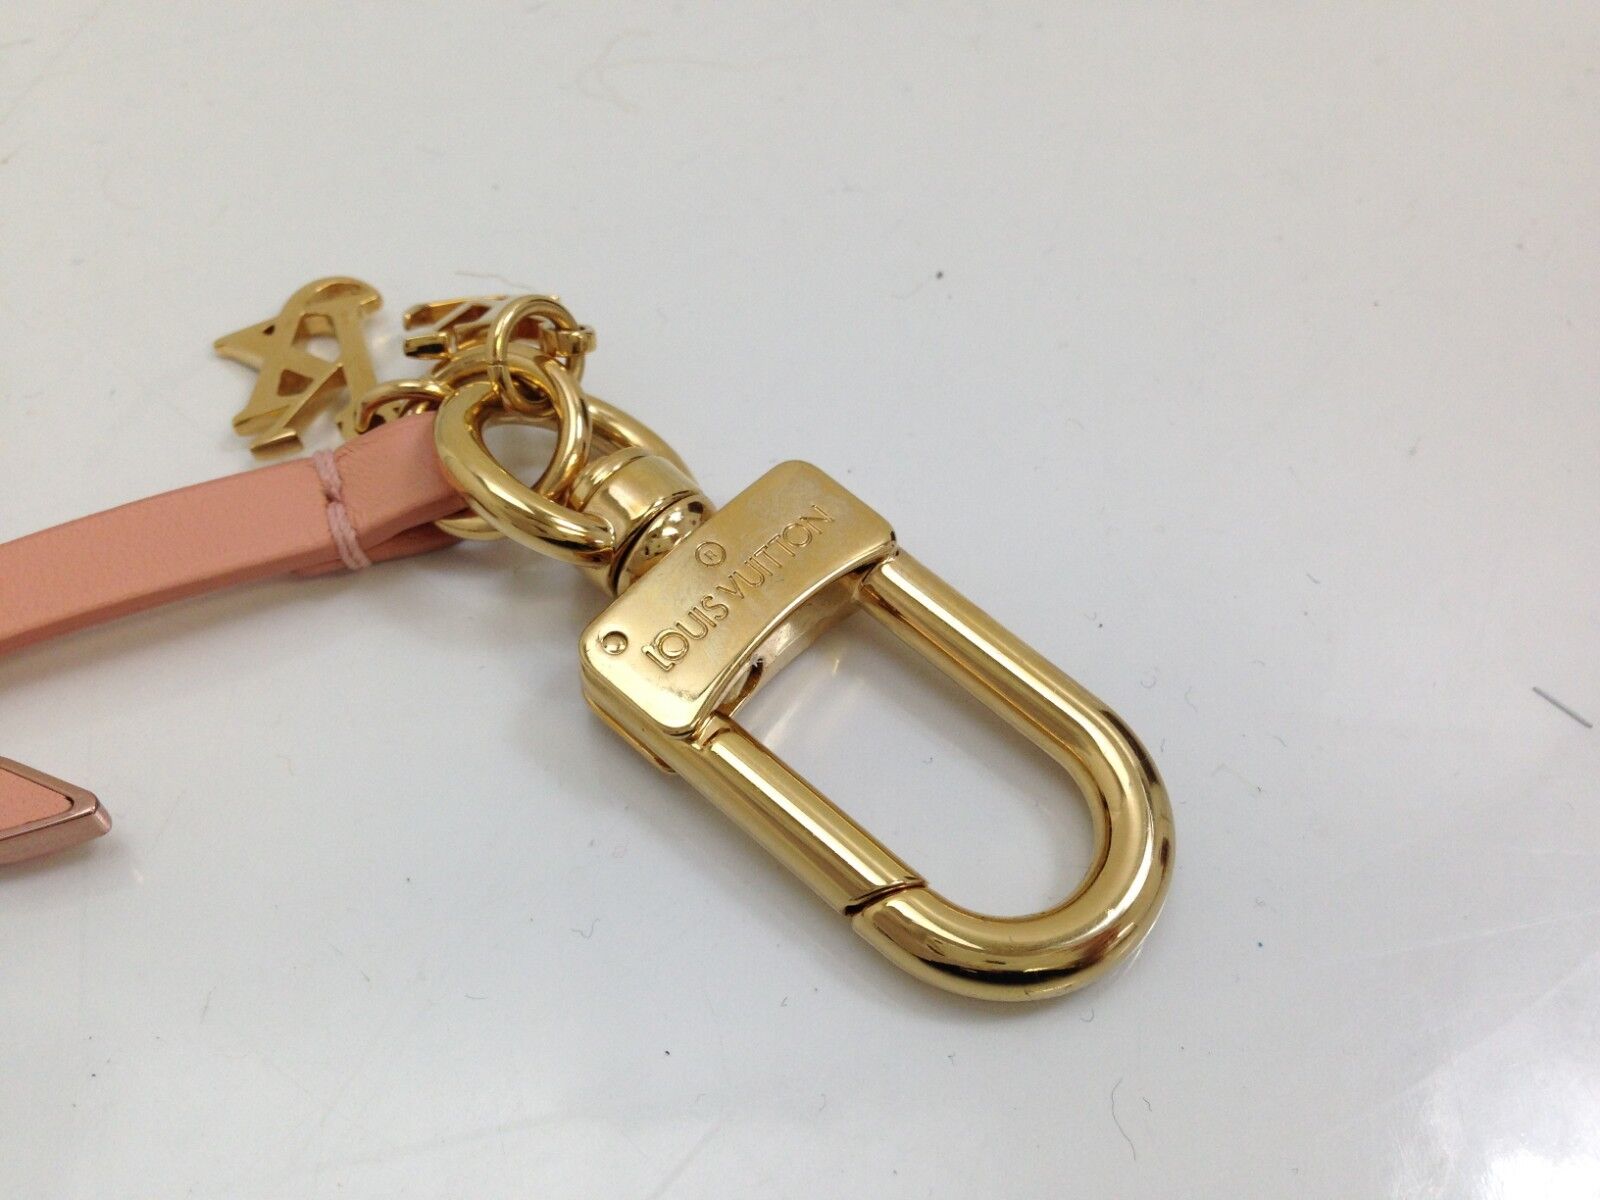 Louis Vuitton Jeff Koons Limited Rabbit bag charm key holder